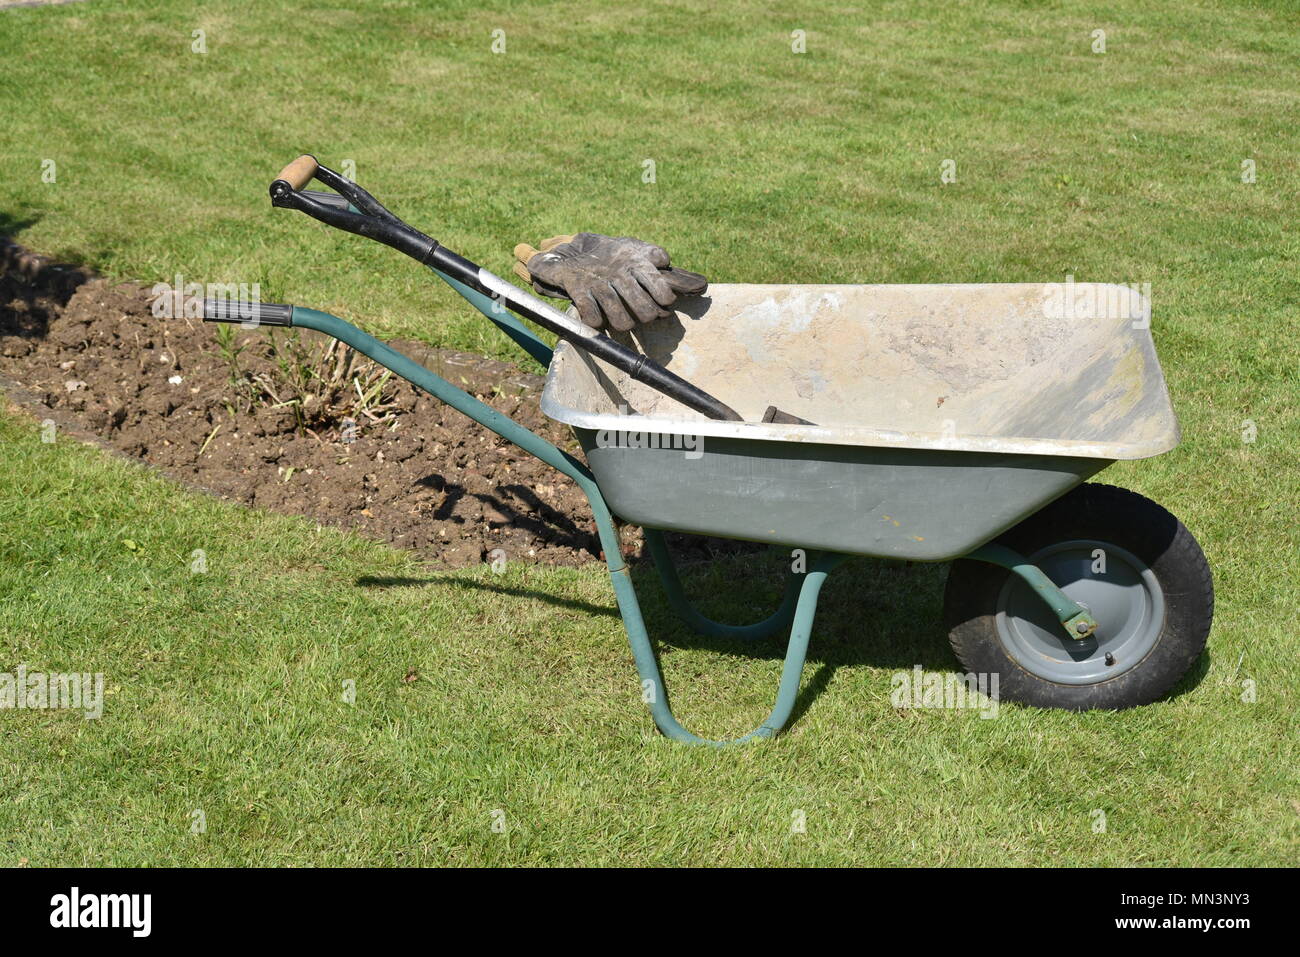 wheel barrow with gardening tools Stock Photo